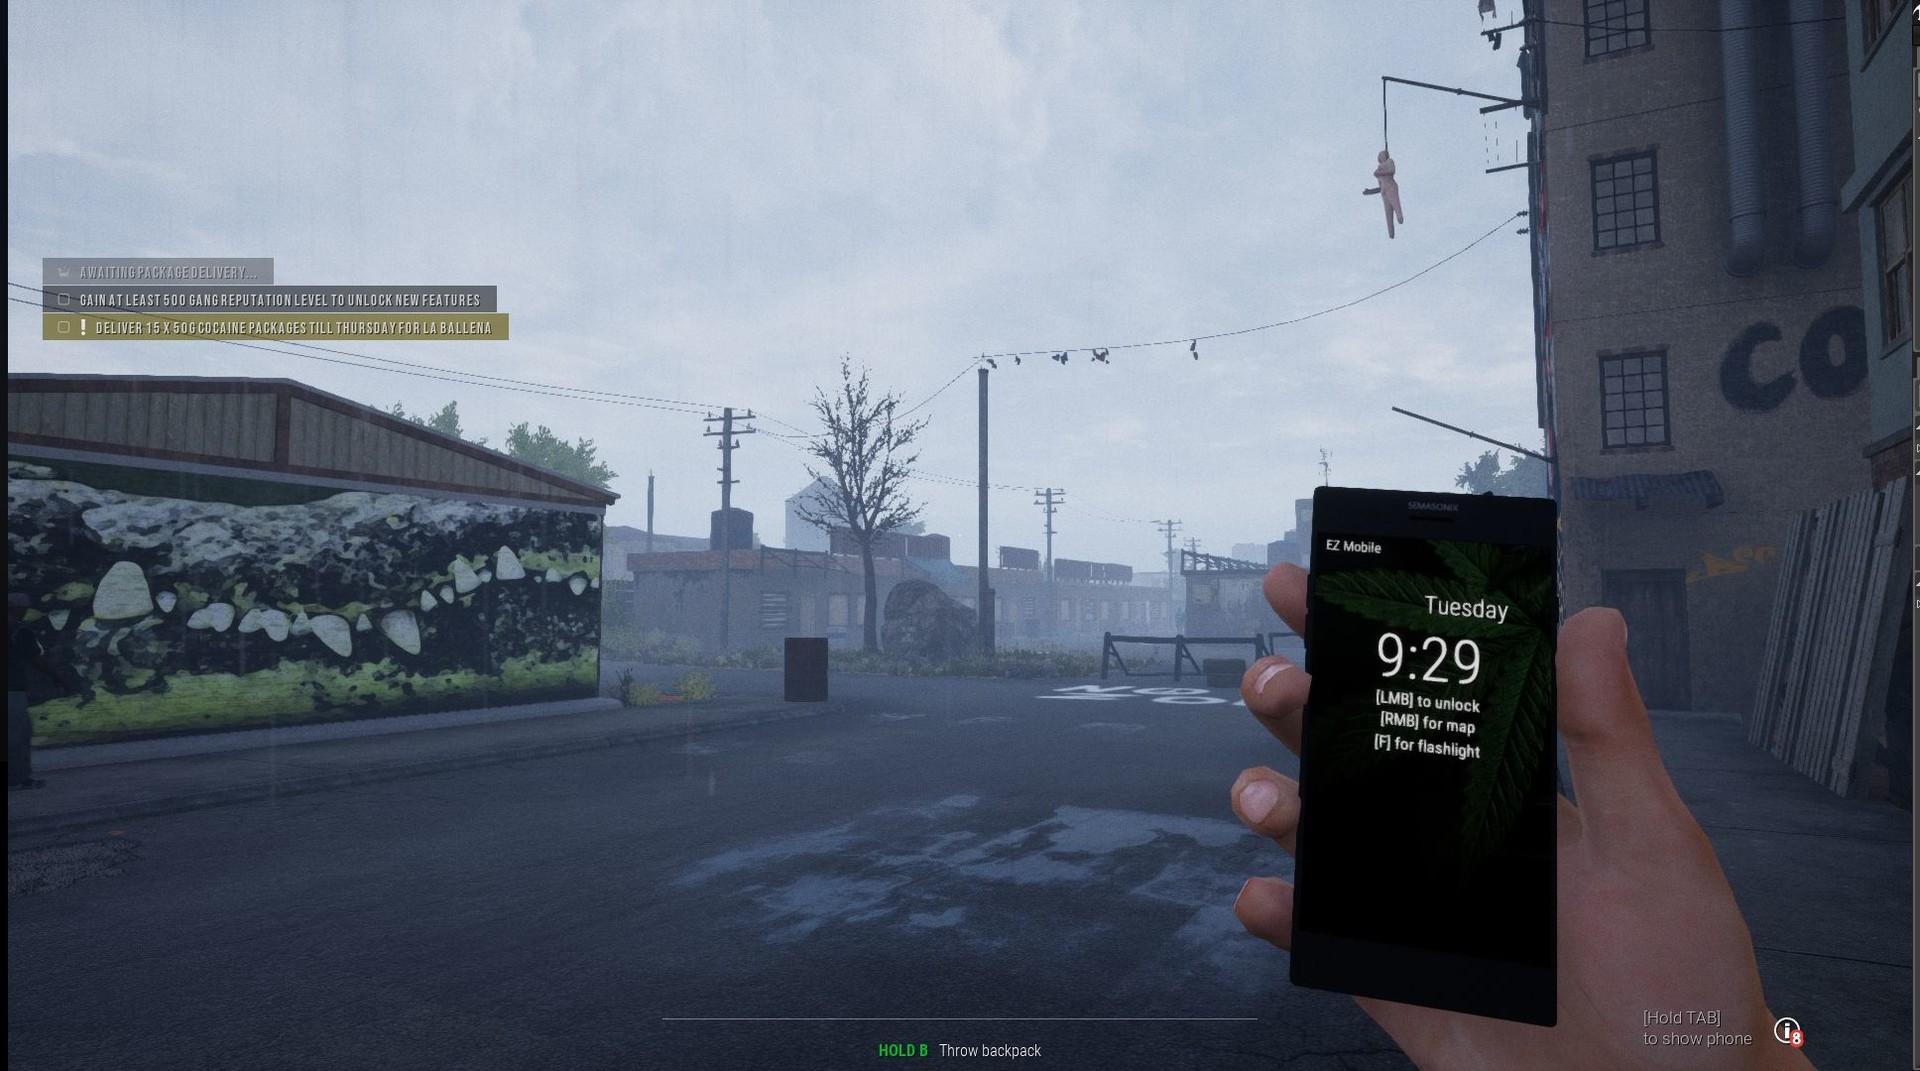 Drug Dealer Simulator On Steam - roblox street simulator how to get money fast